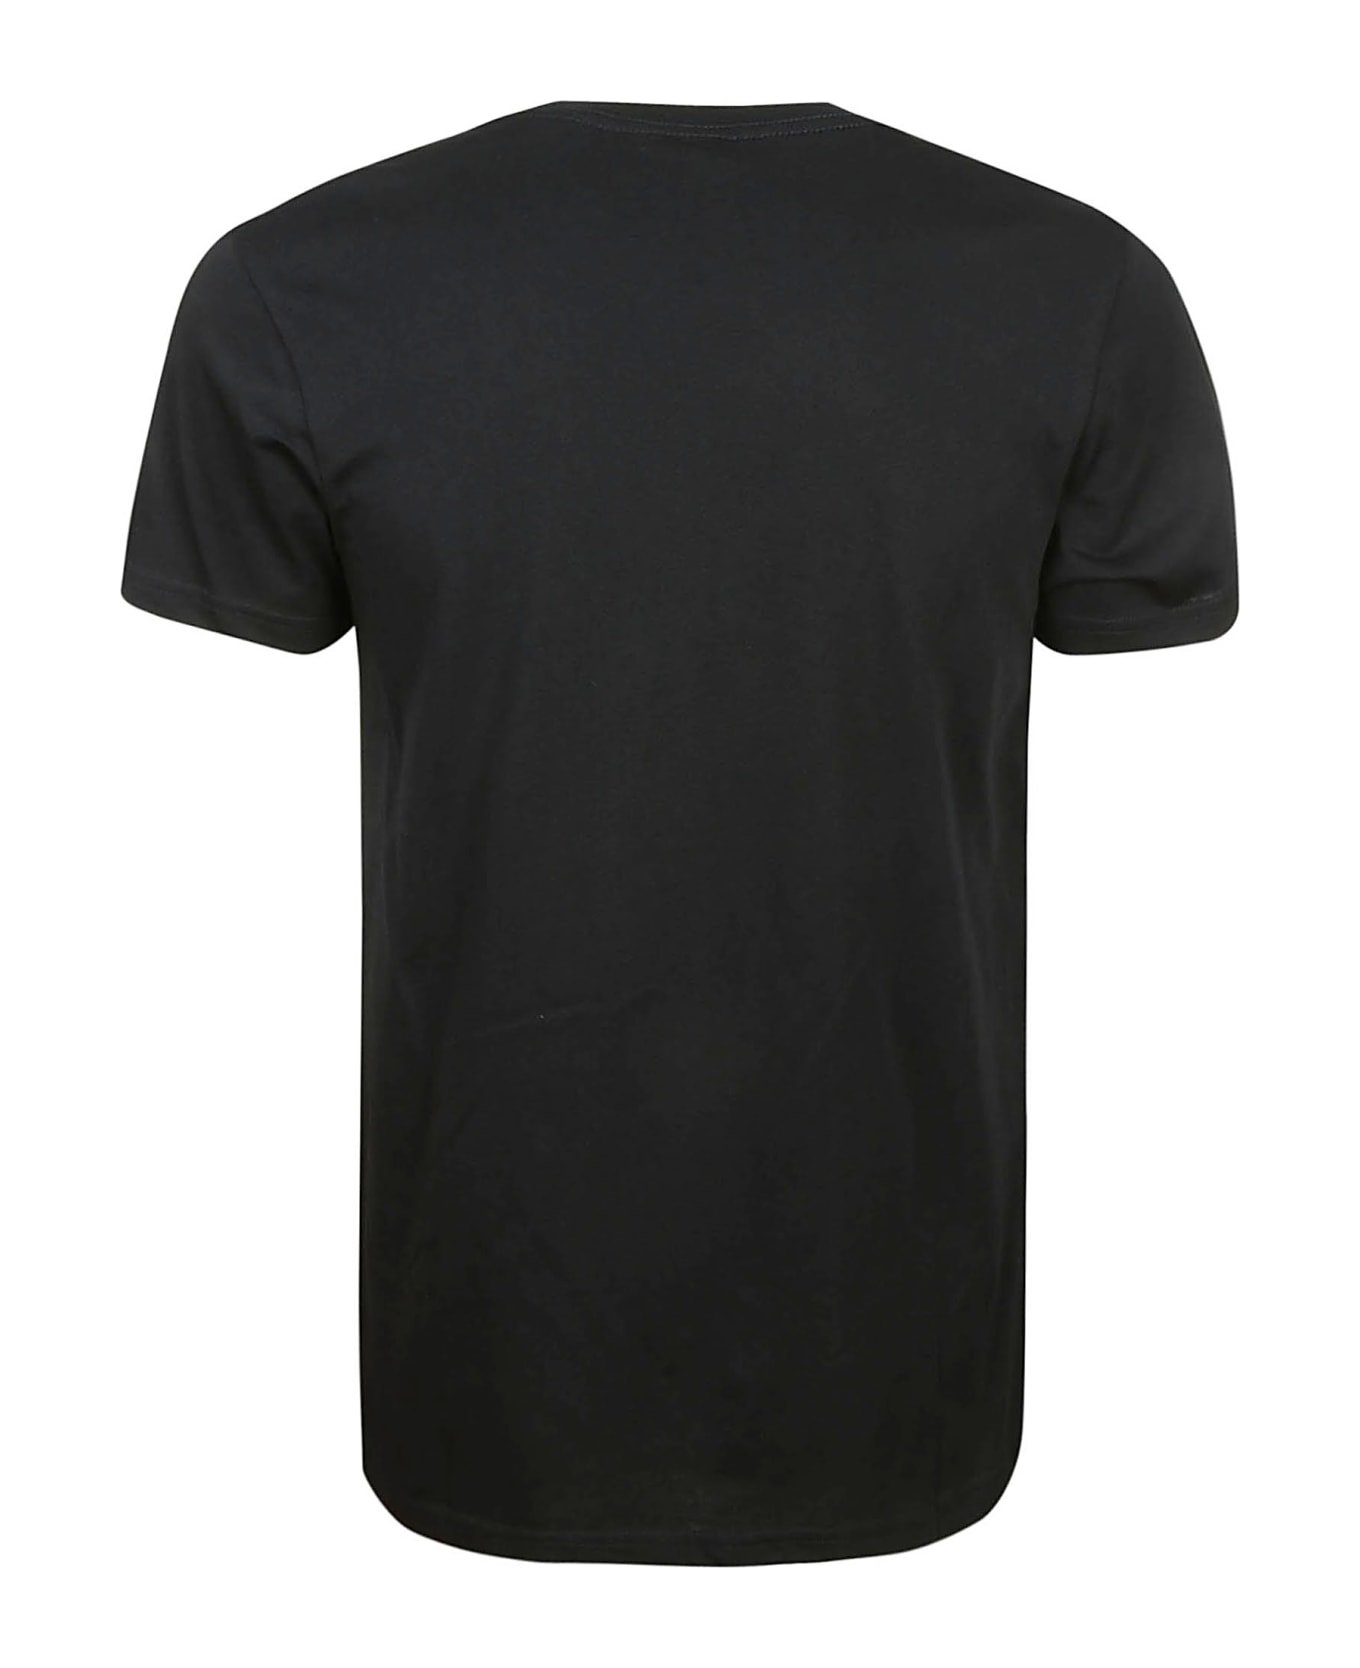 Paul Smith Slim Fit T-shirt Paint Test - Very Dark Navy